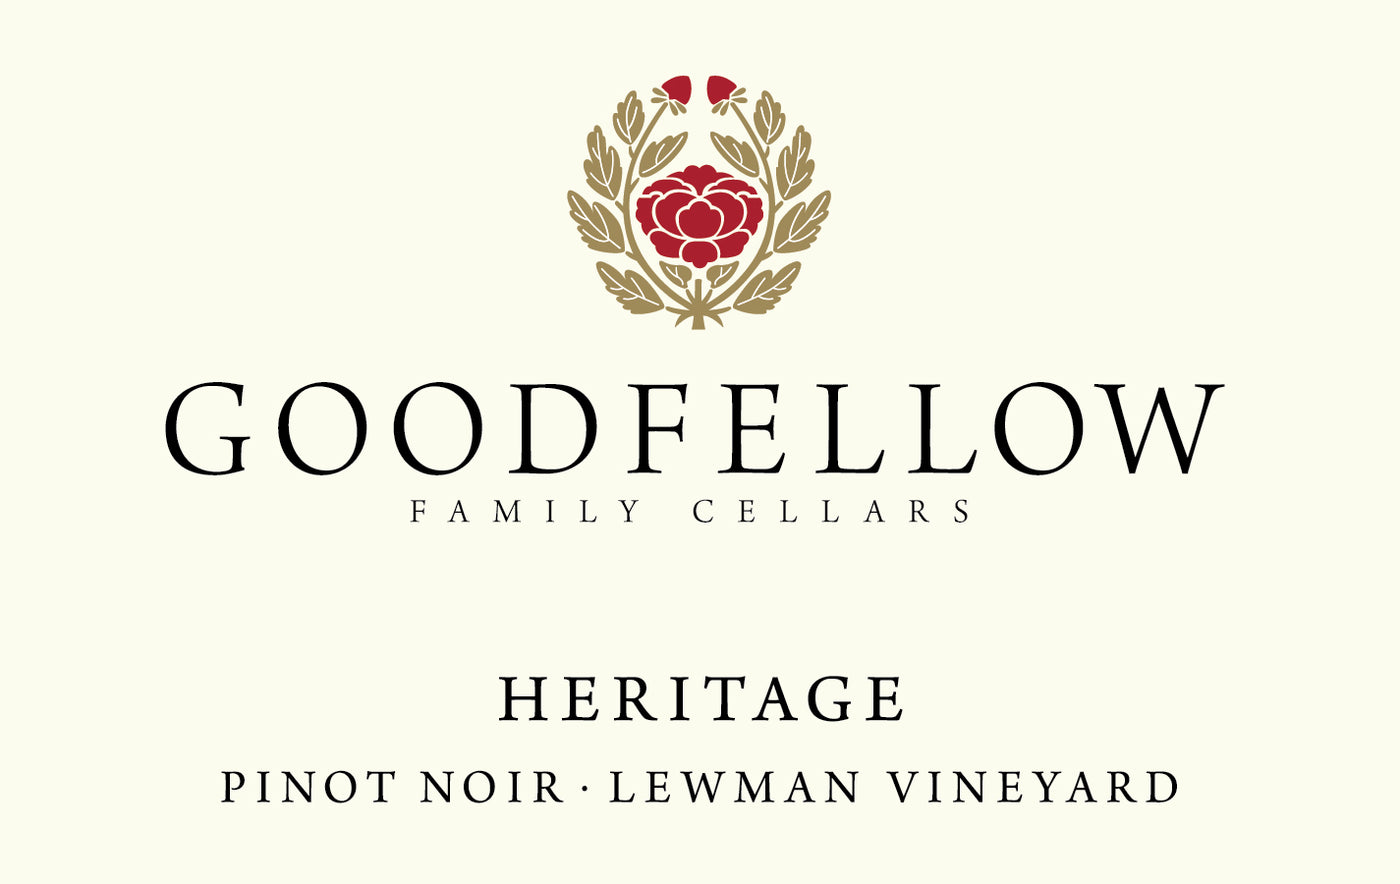 Goodfellow Heritage No. 16 Lewman Vineyard Pinot noir 2019